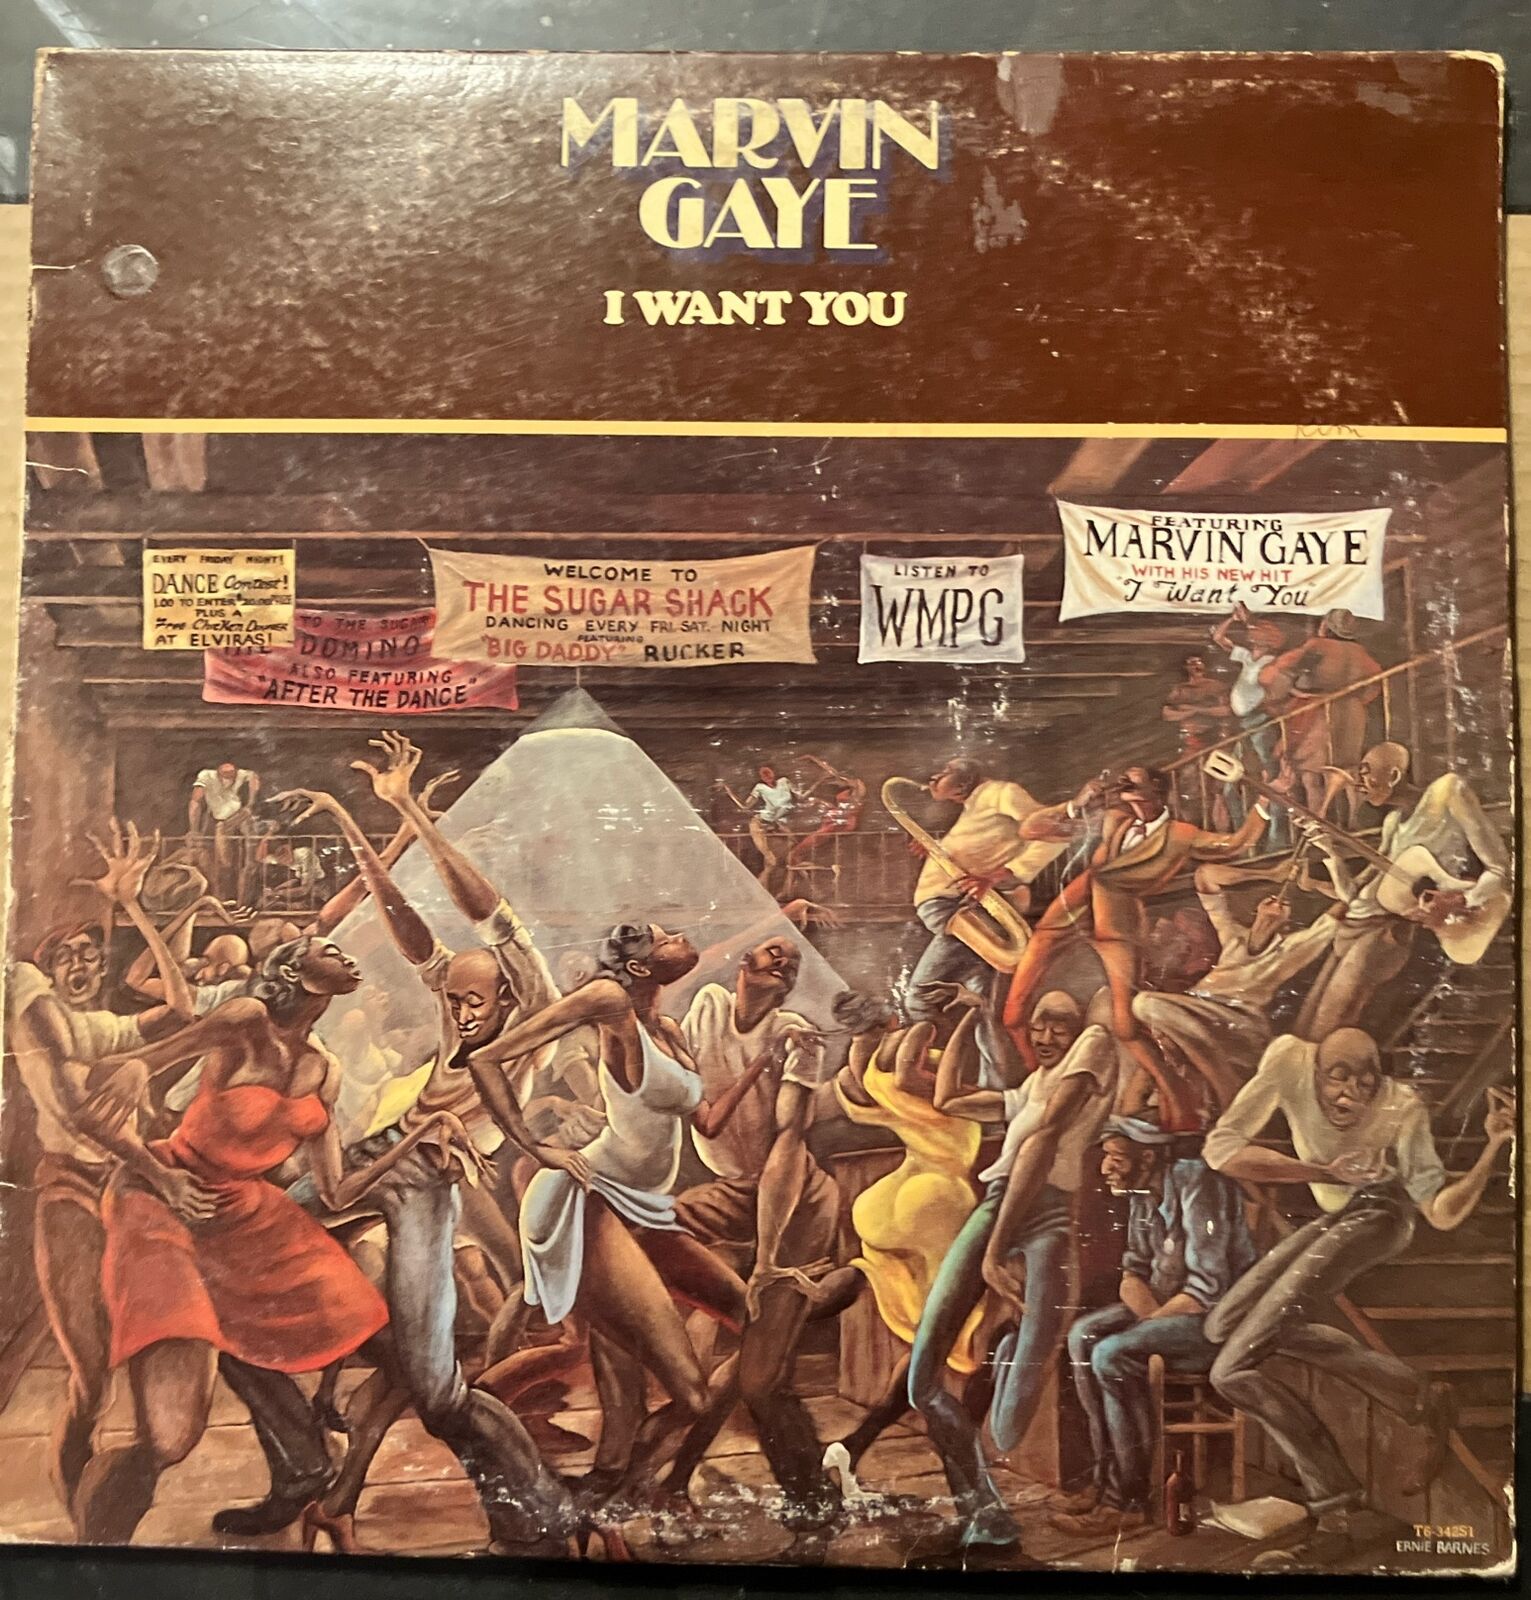 MARVIN GAYE I WANT YOU SOUL/R&B 1976 LP VINYL ALBUM